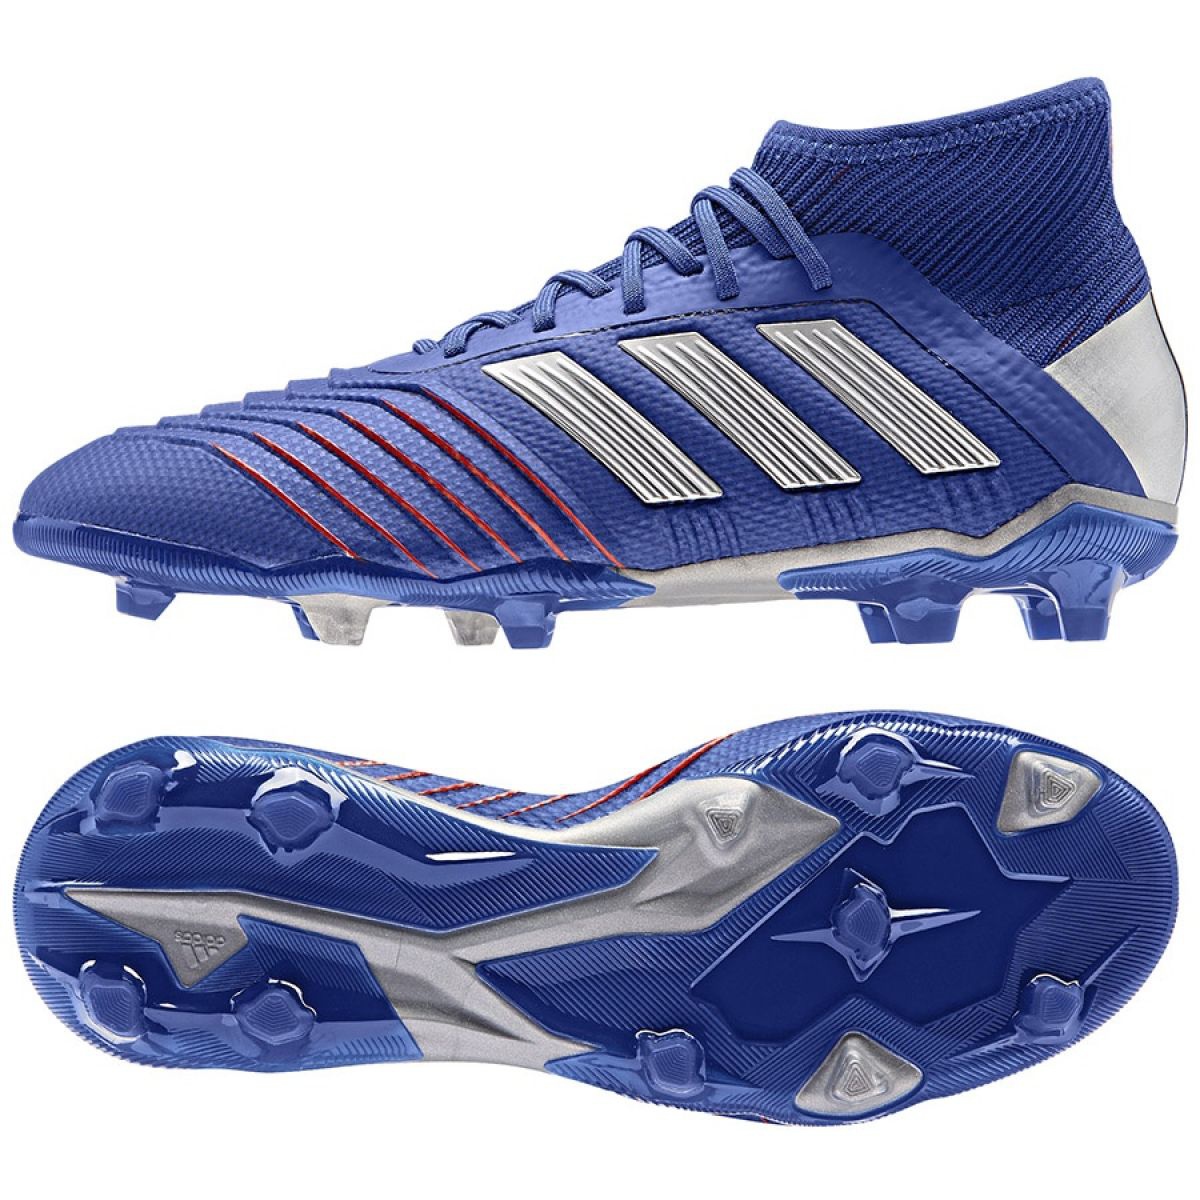 Adidas Predator 19.1 Jr CM8530 football boots blue blue - KeeShoes